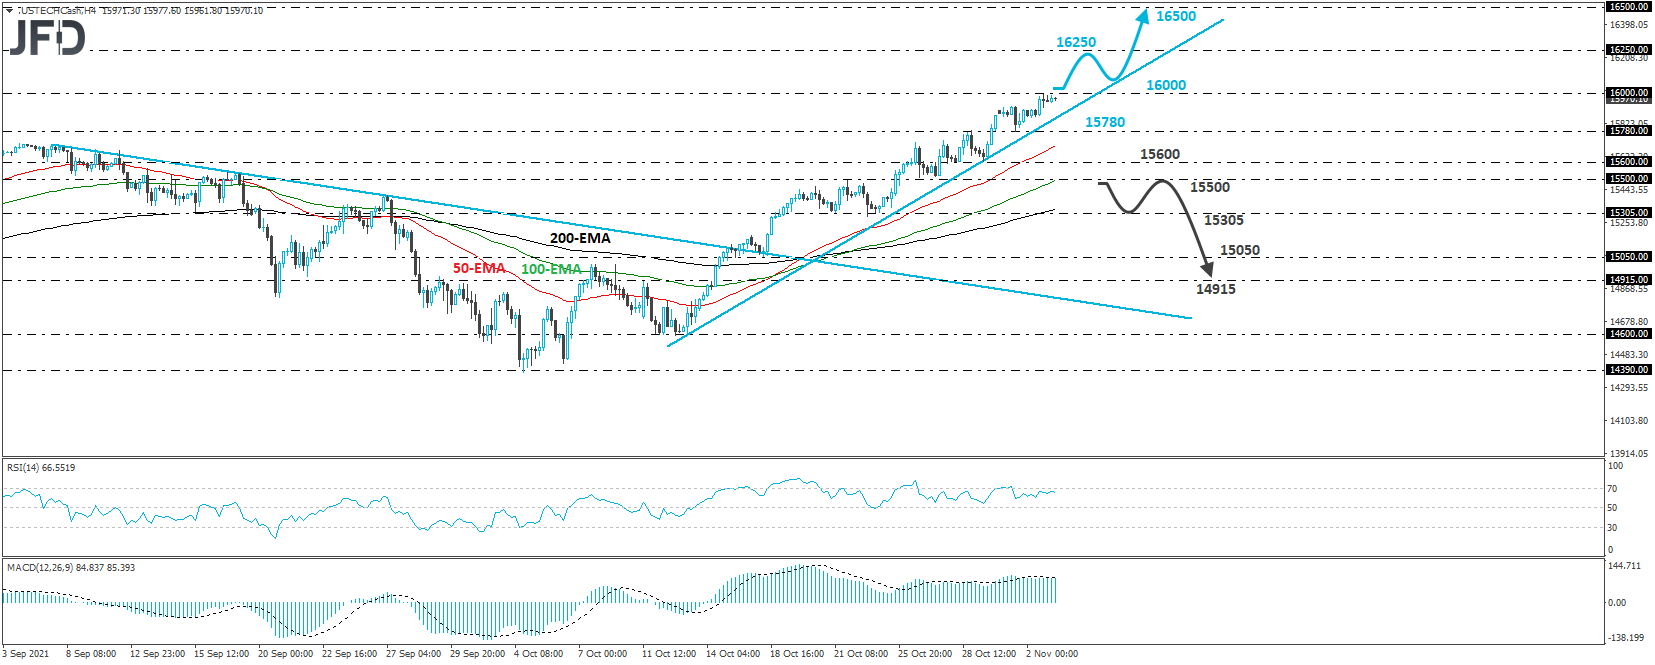 NASDAQ 100 cash index 4-hour chart technical analysis.